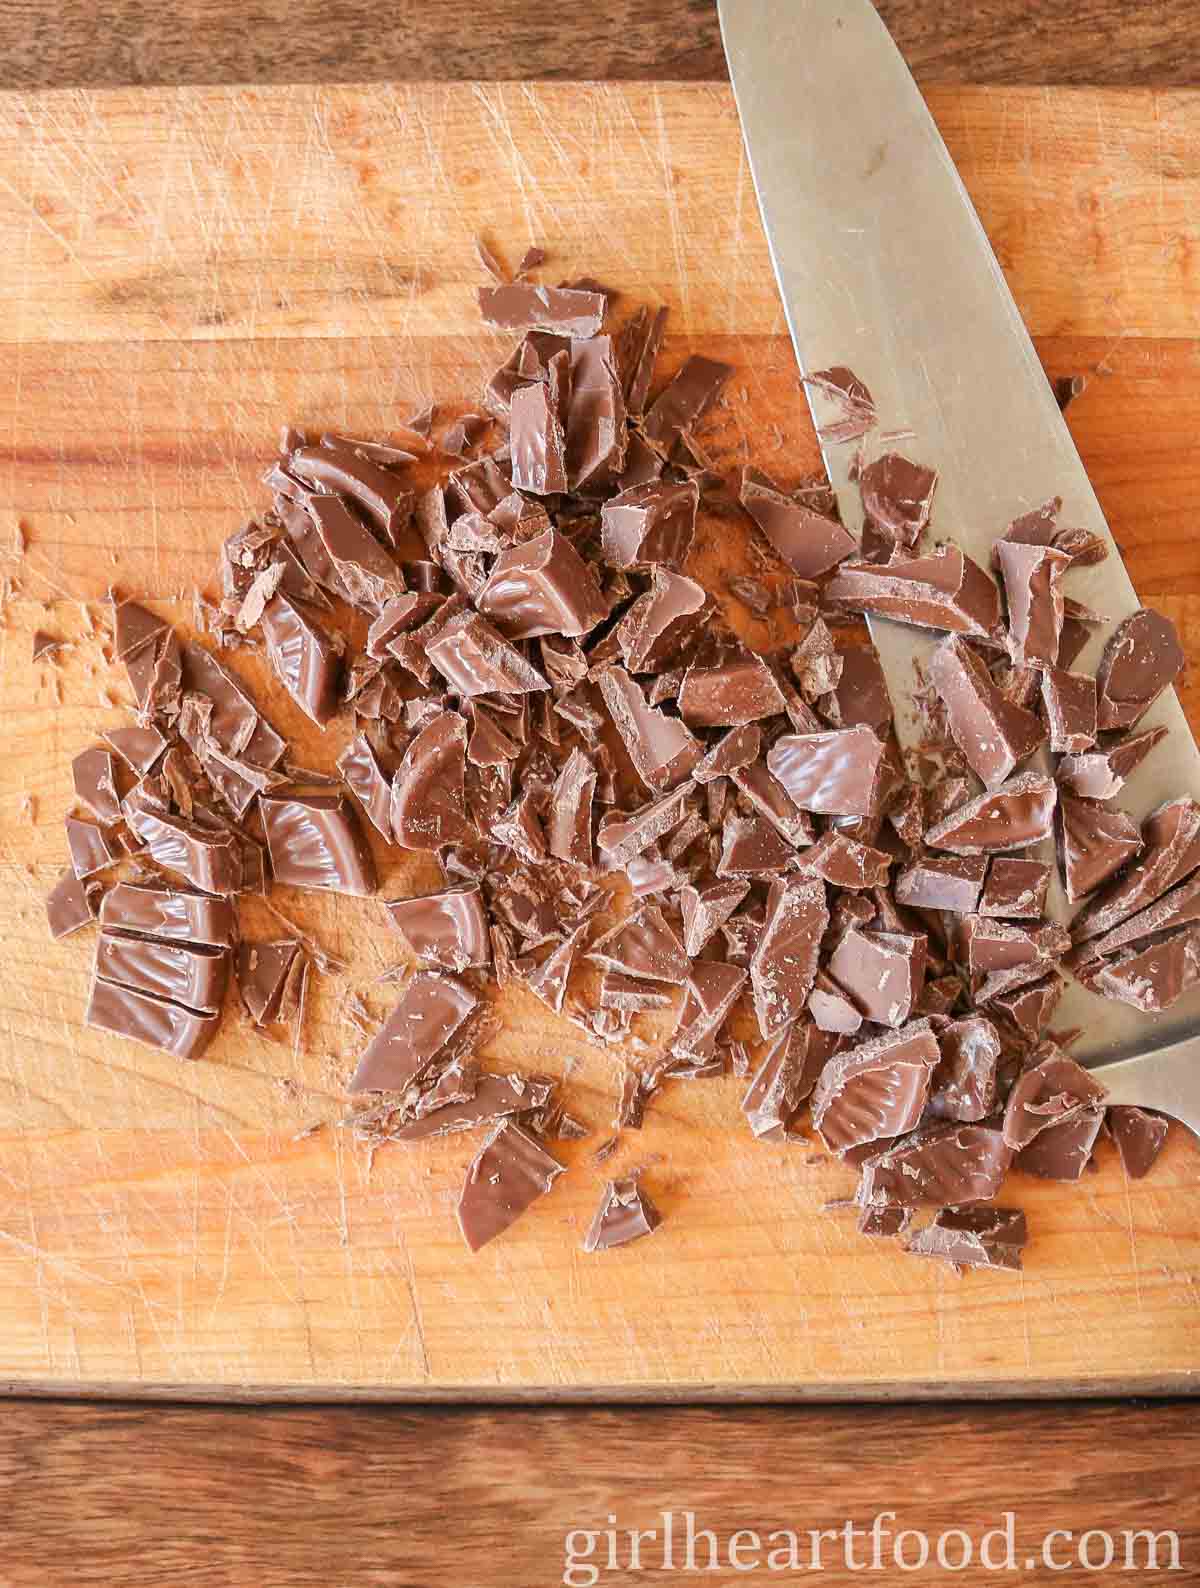 Chopped chocolate next to a knife.